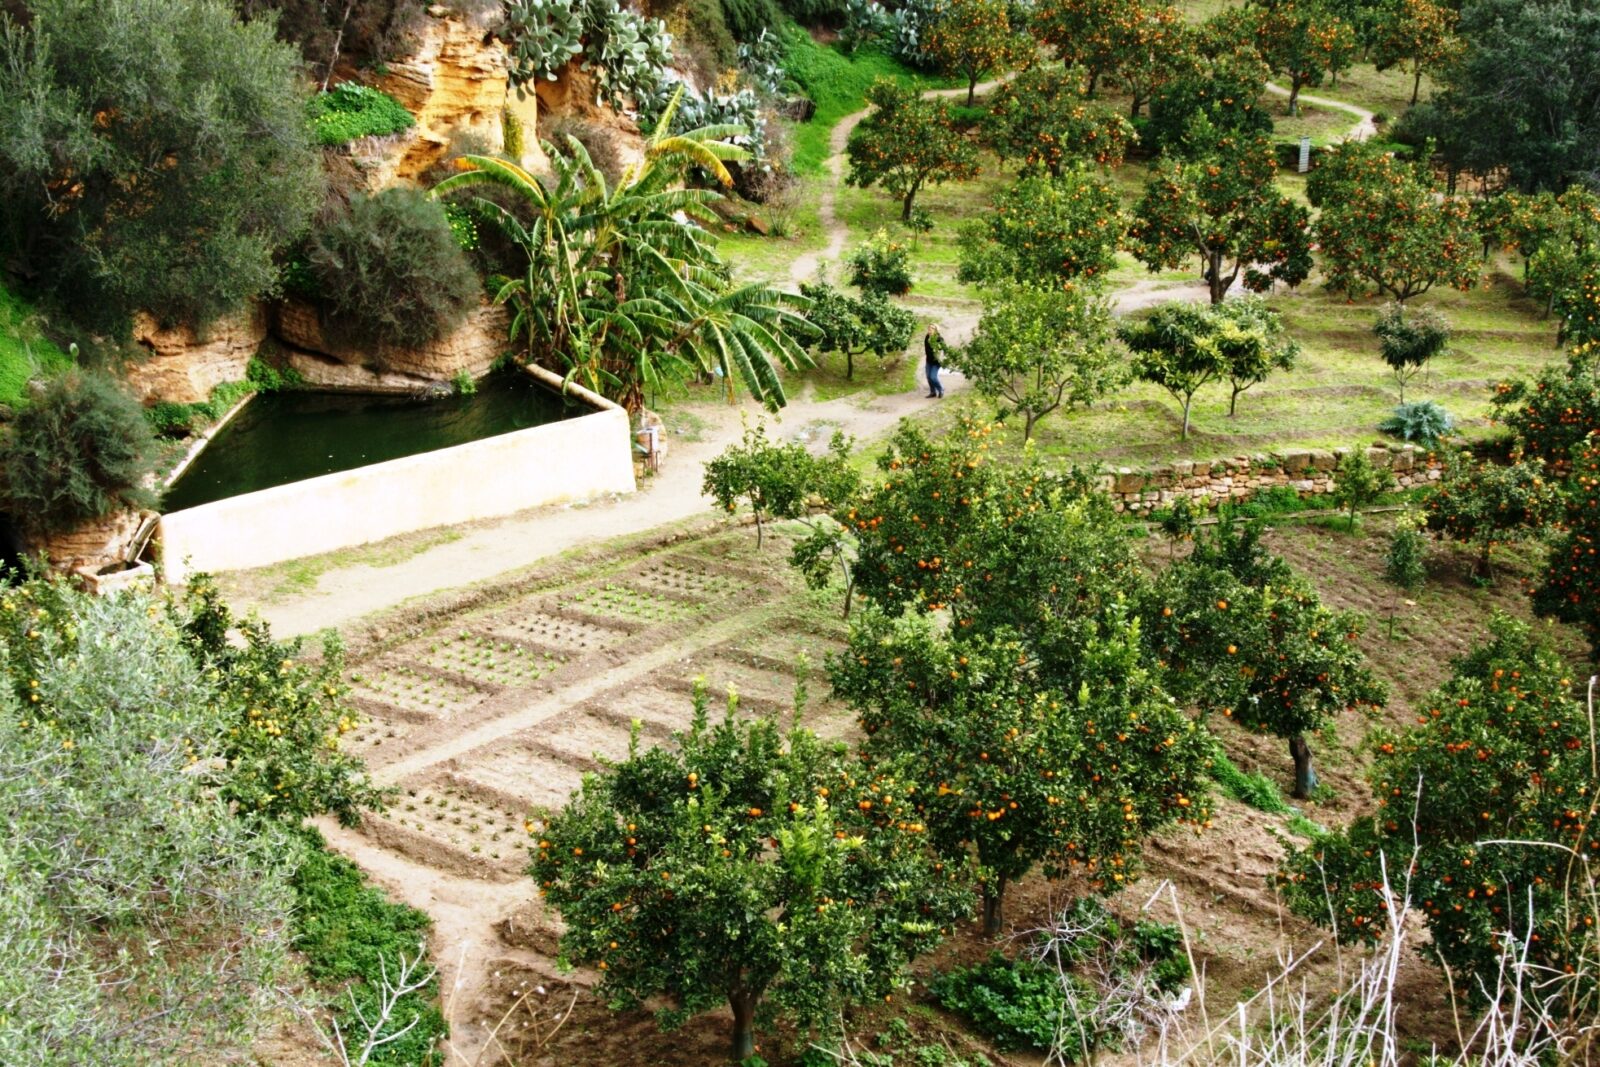 View of the Kolymbethra Garden